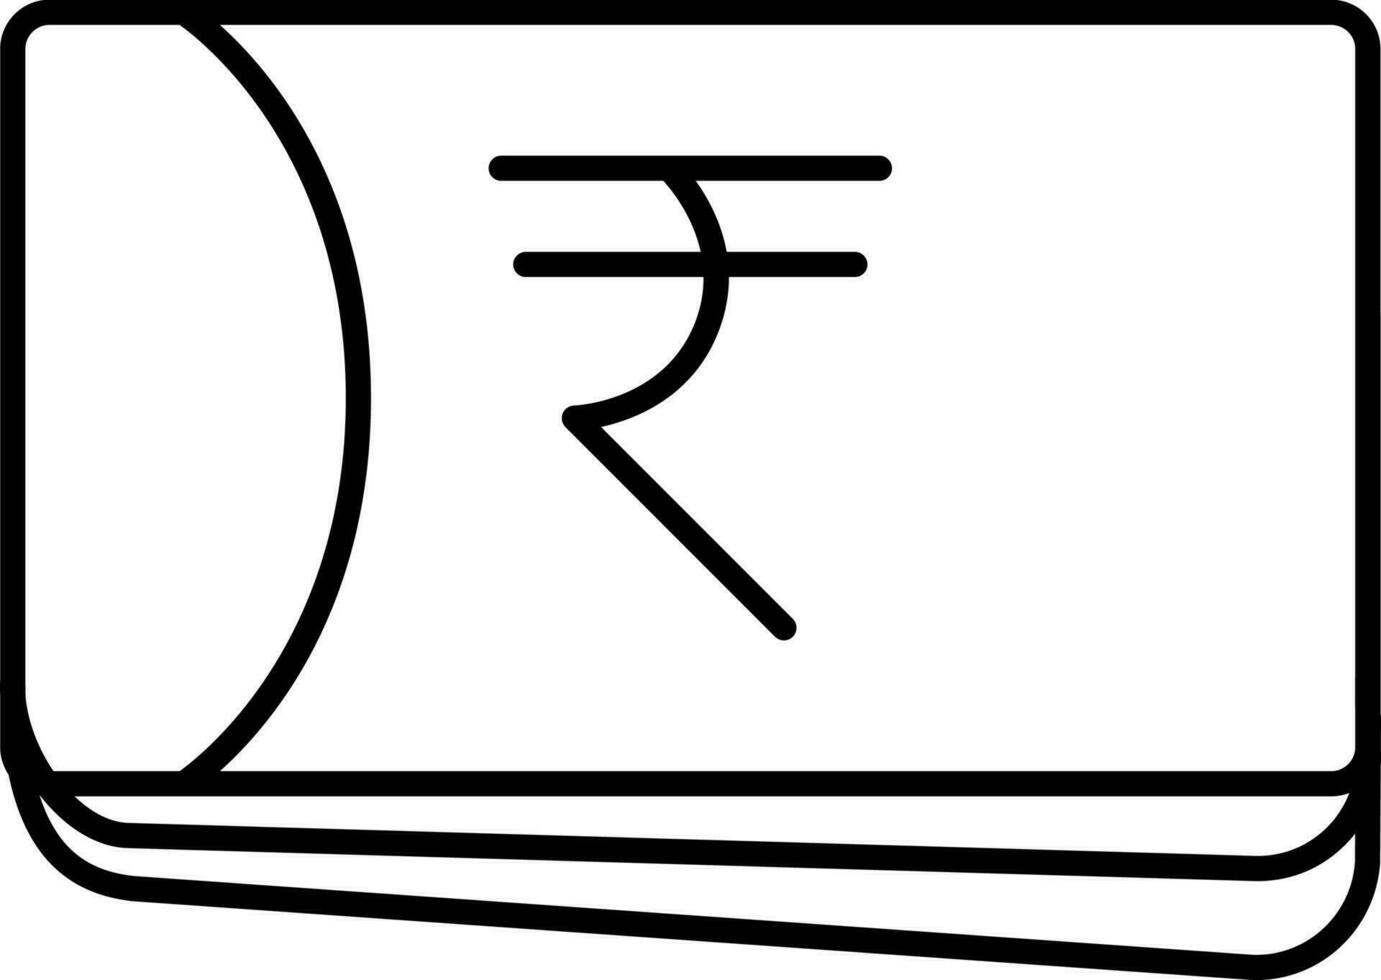 indiano rupia notas símbolo. vetor